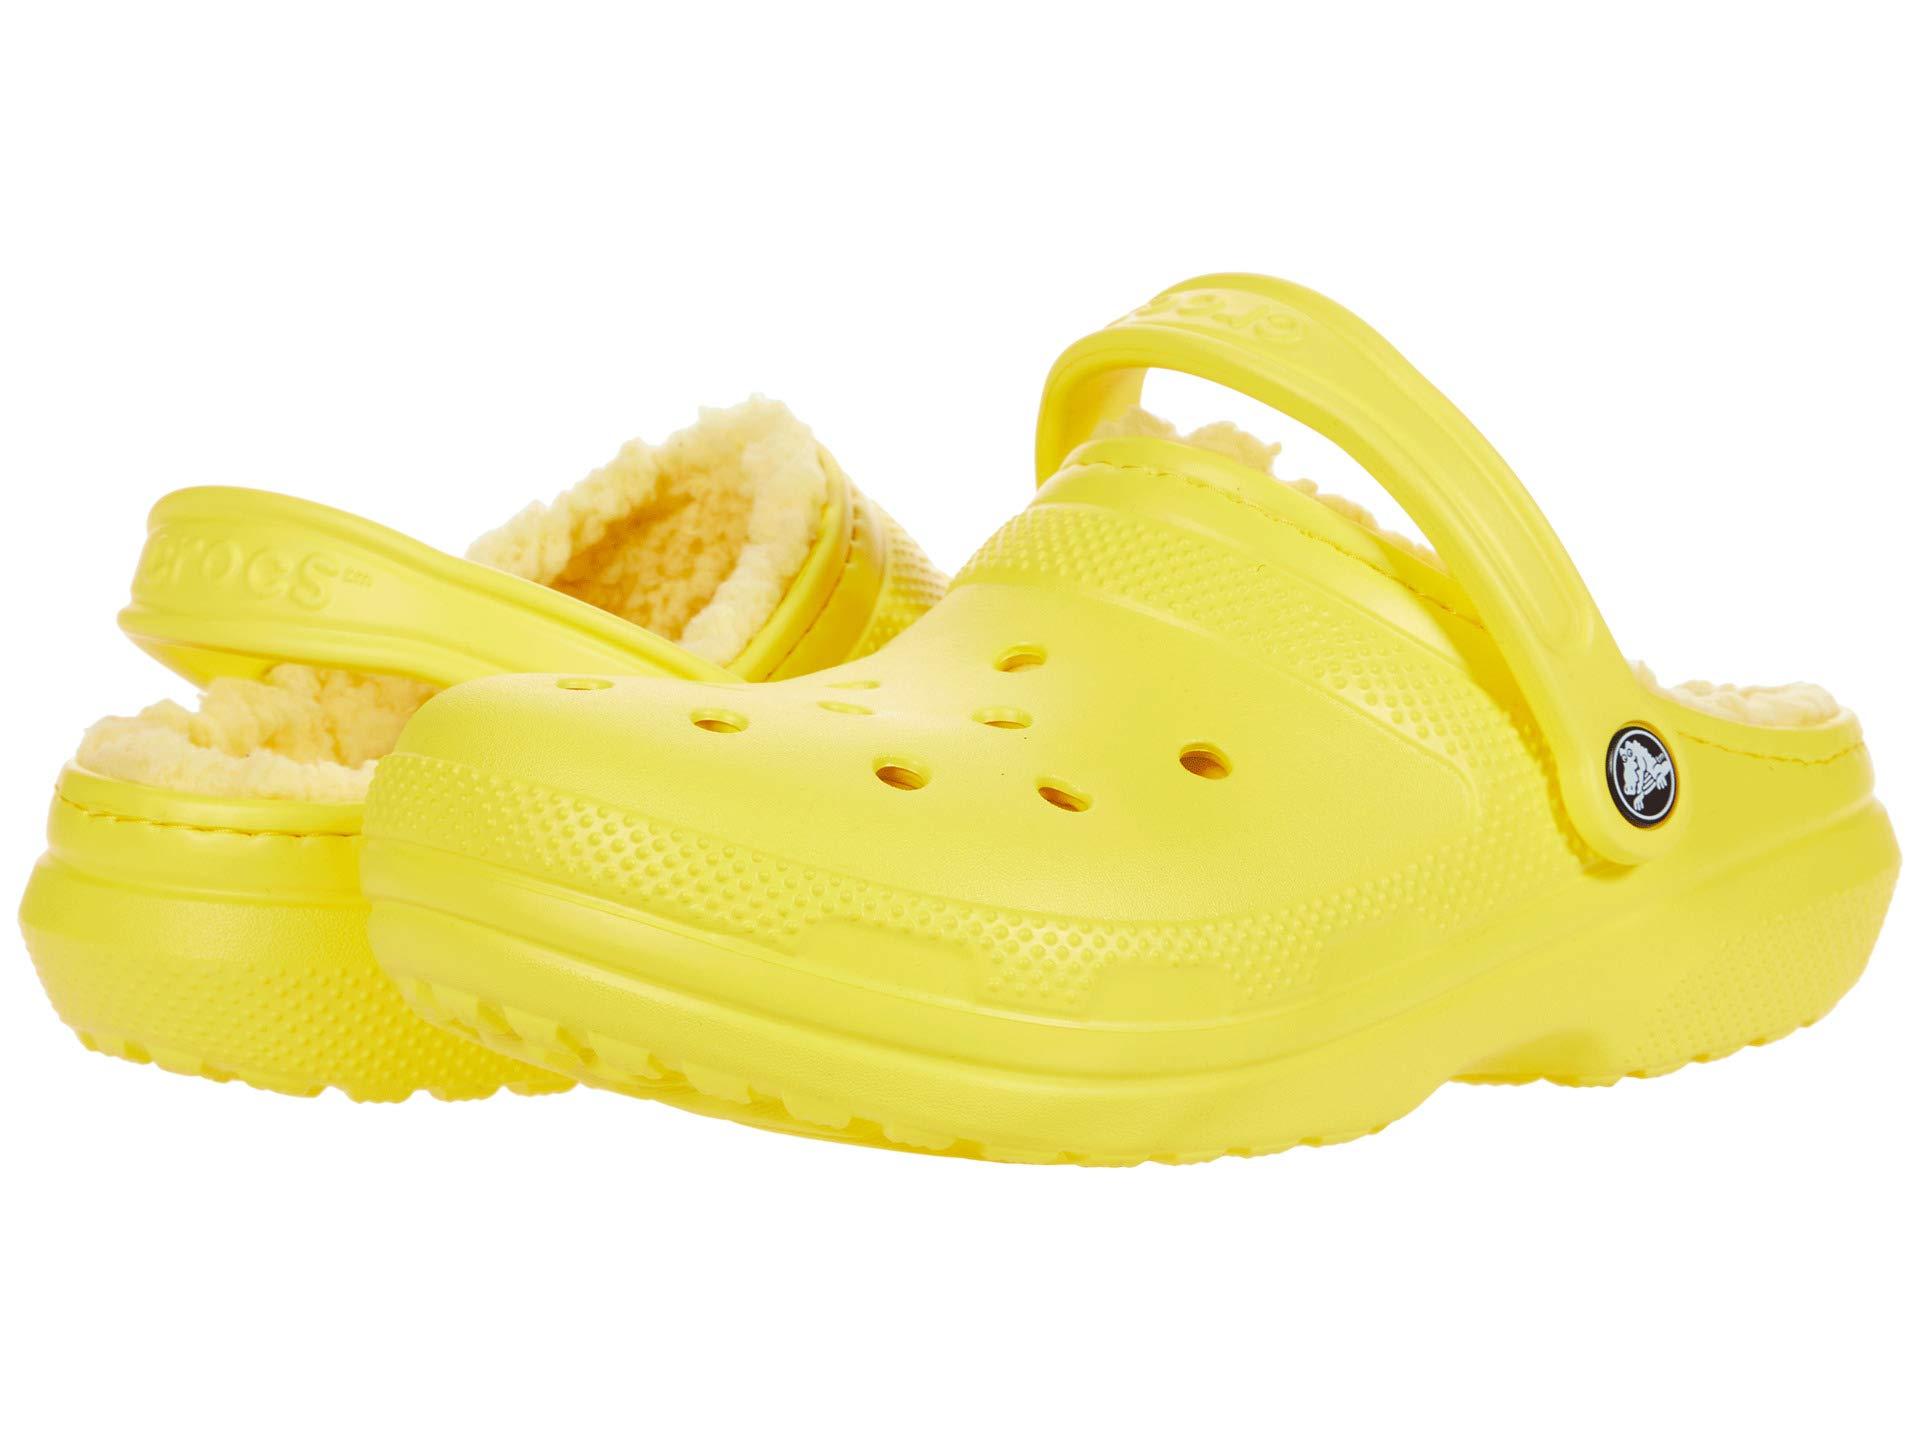 classic lined crocs yellow